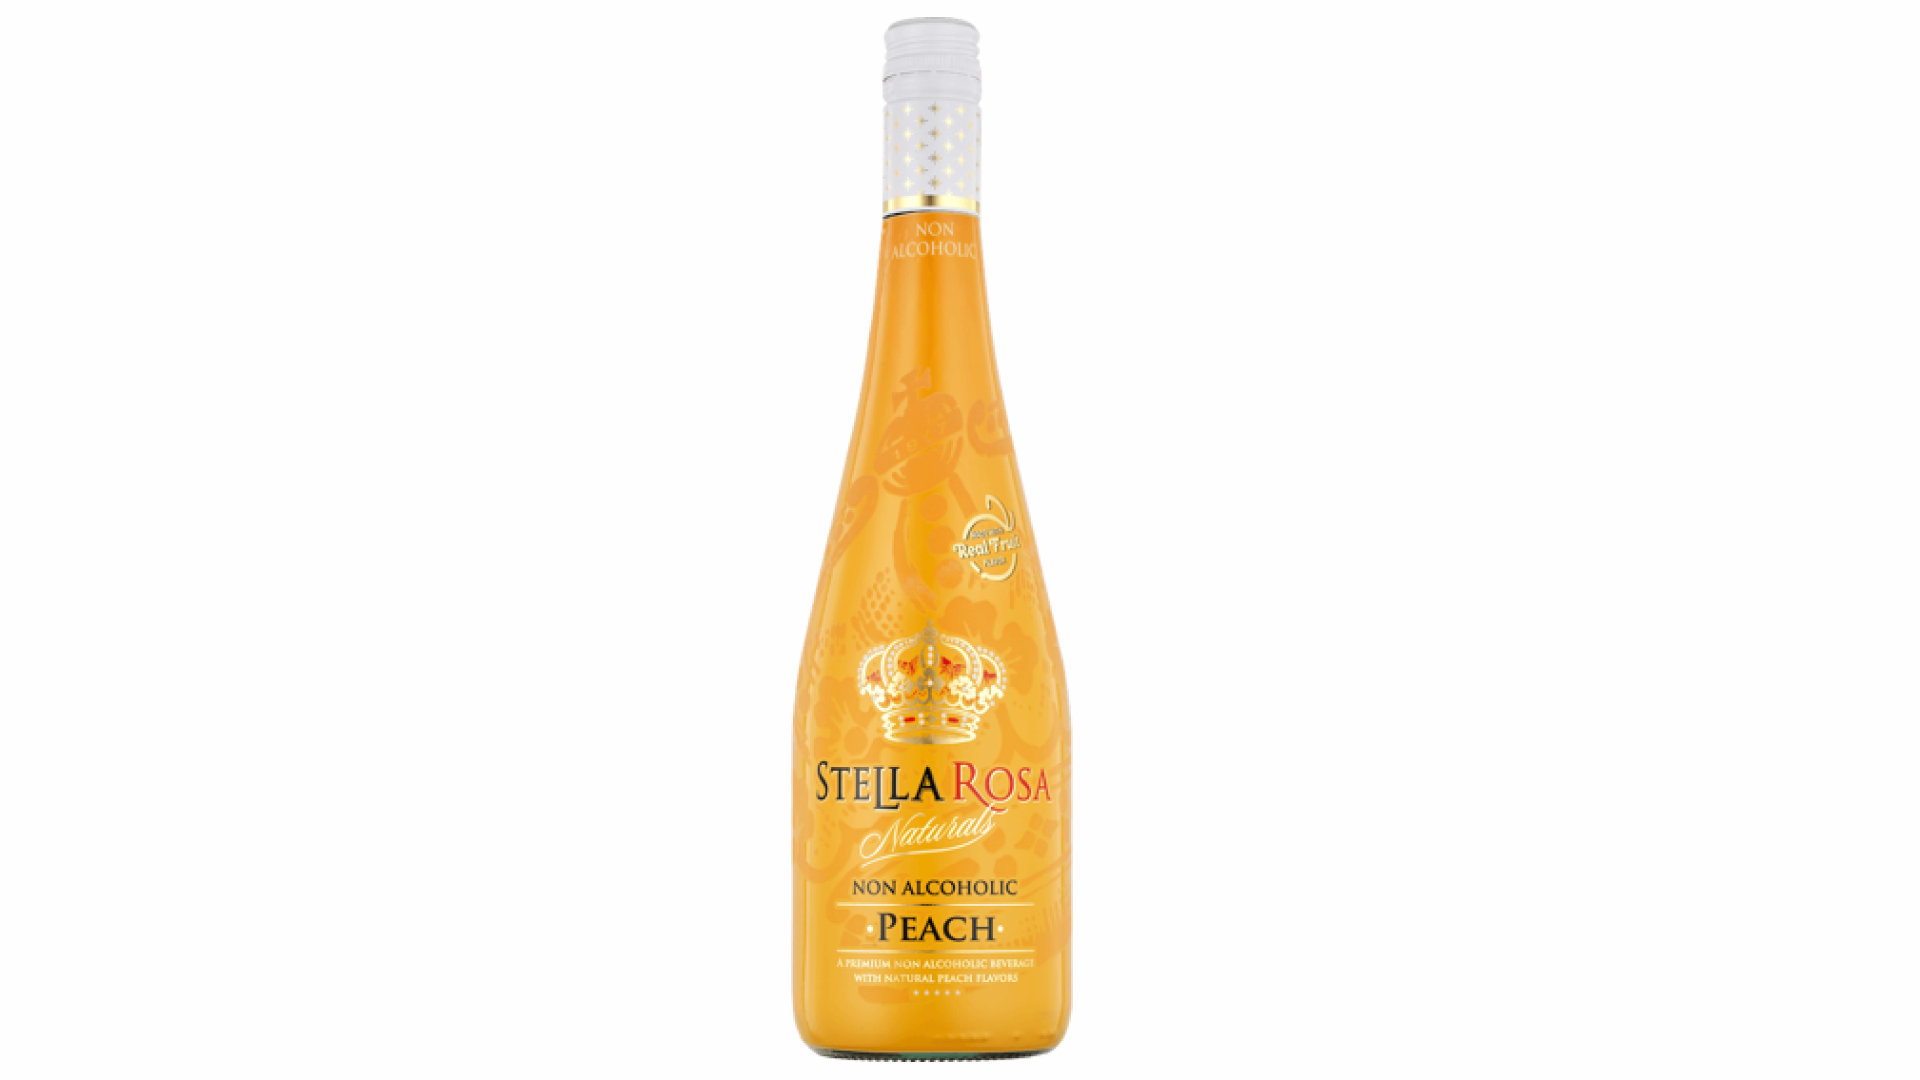 A bottle of Stella Rosa non-alcoholic wine